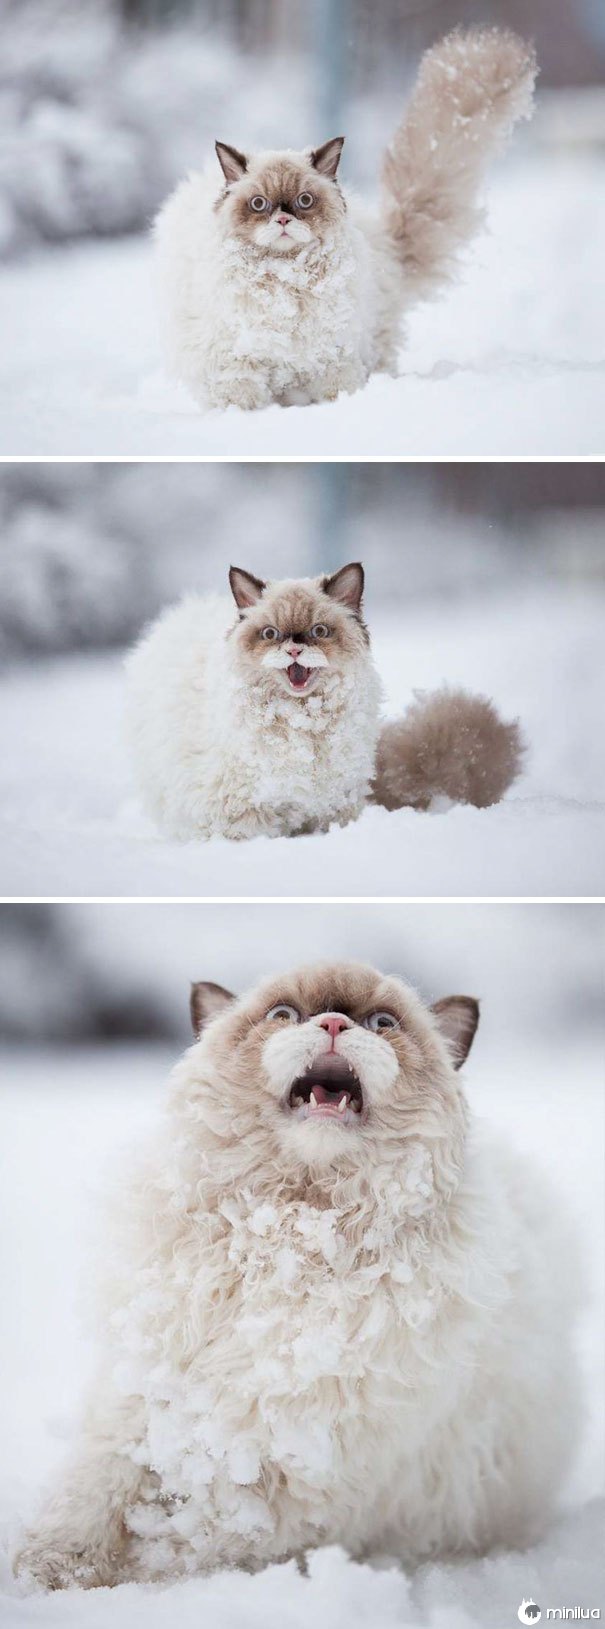 Este gato descobre a neve pela primeira vez